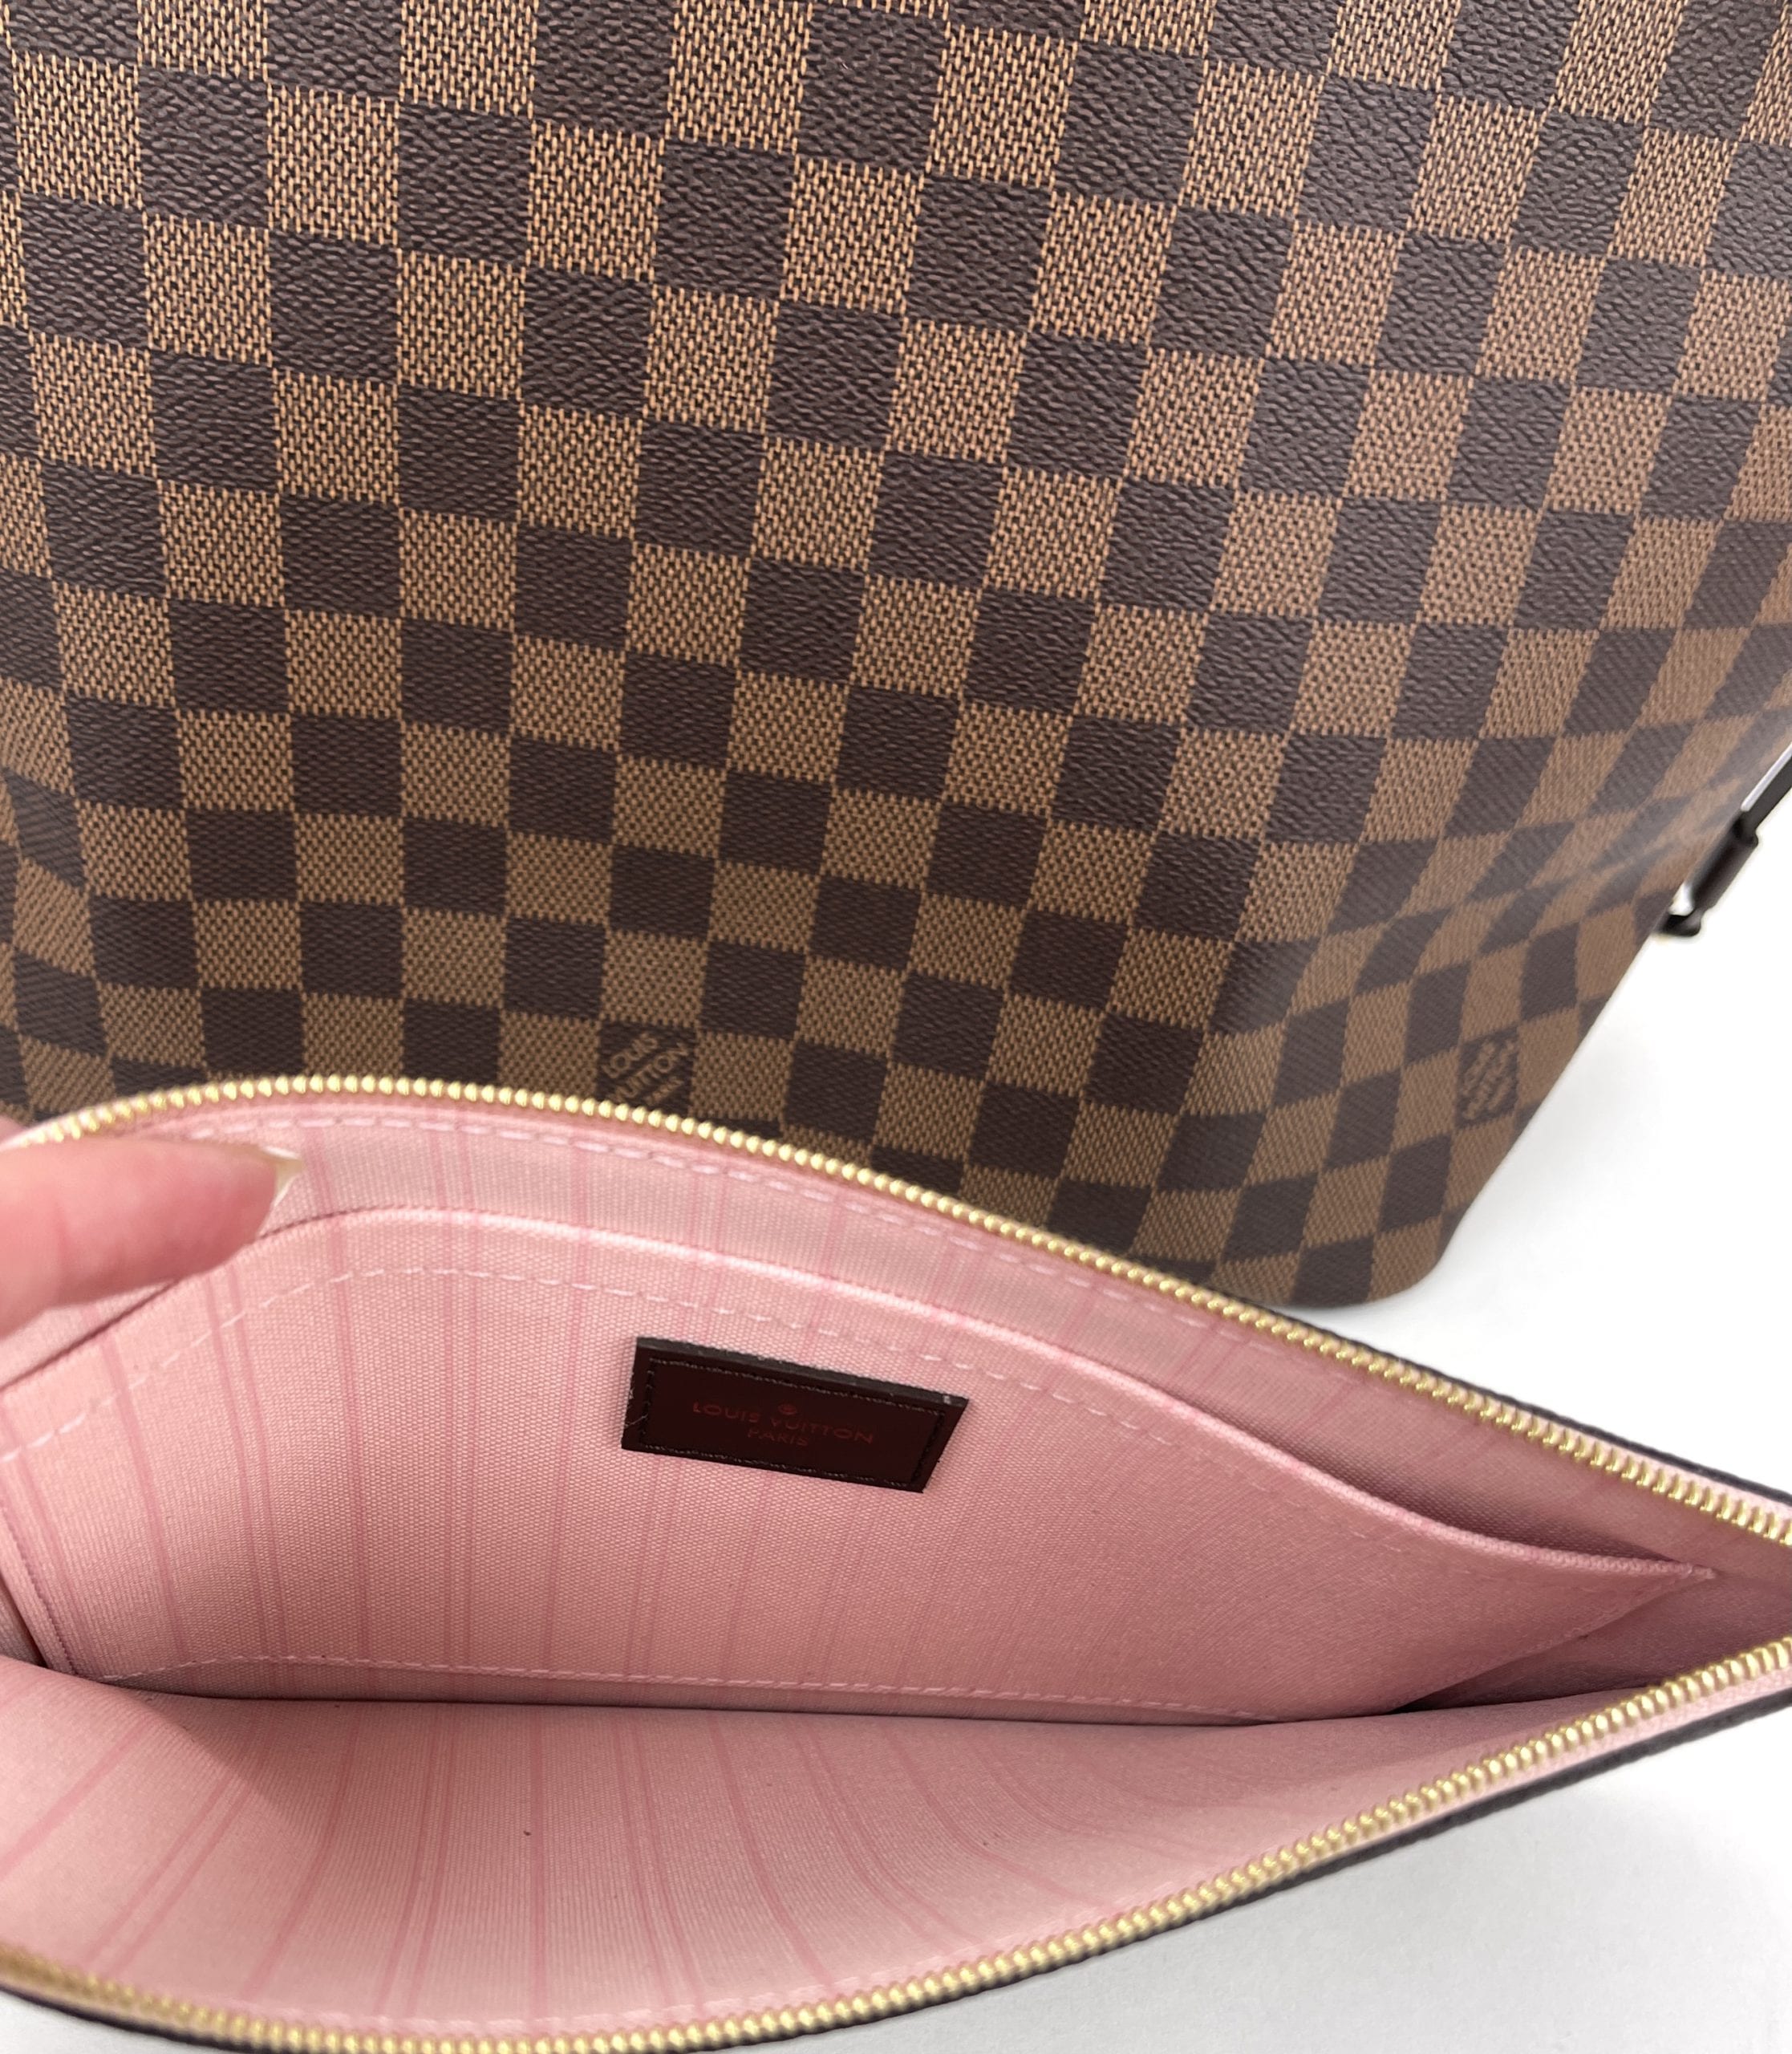 Louis Vuitton bag Neverfull MM checkered ebony, pink ballerina